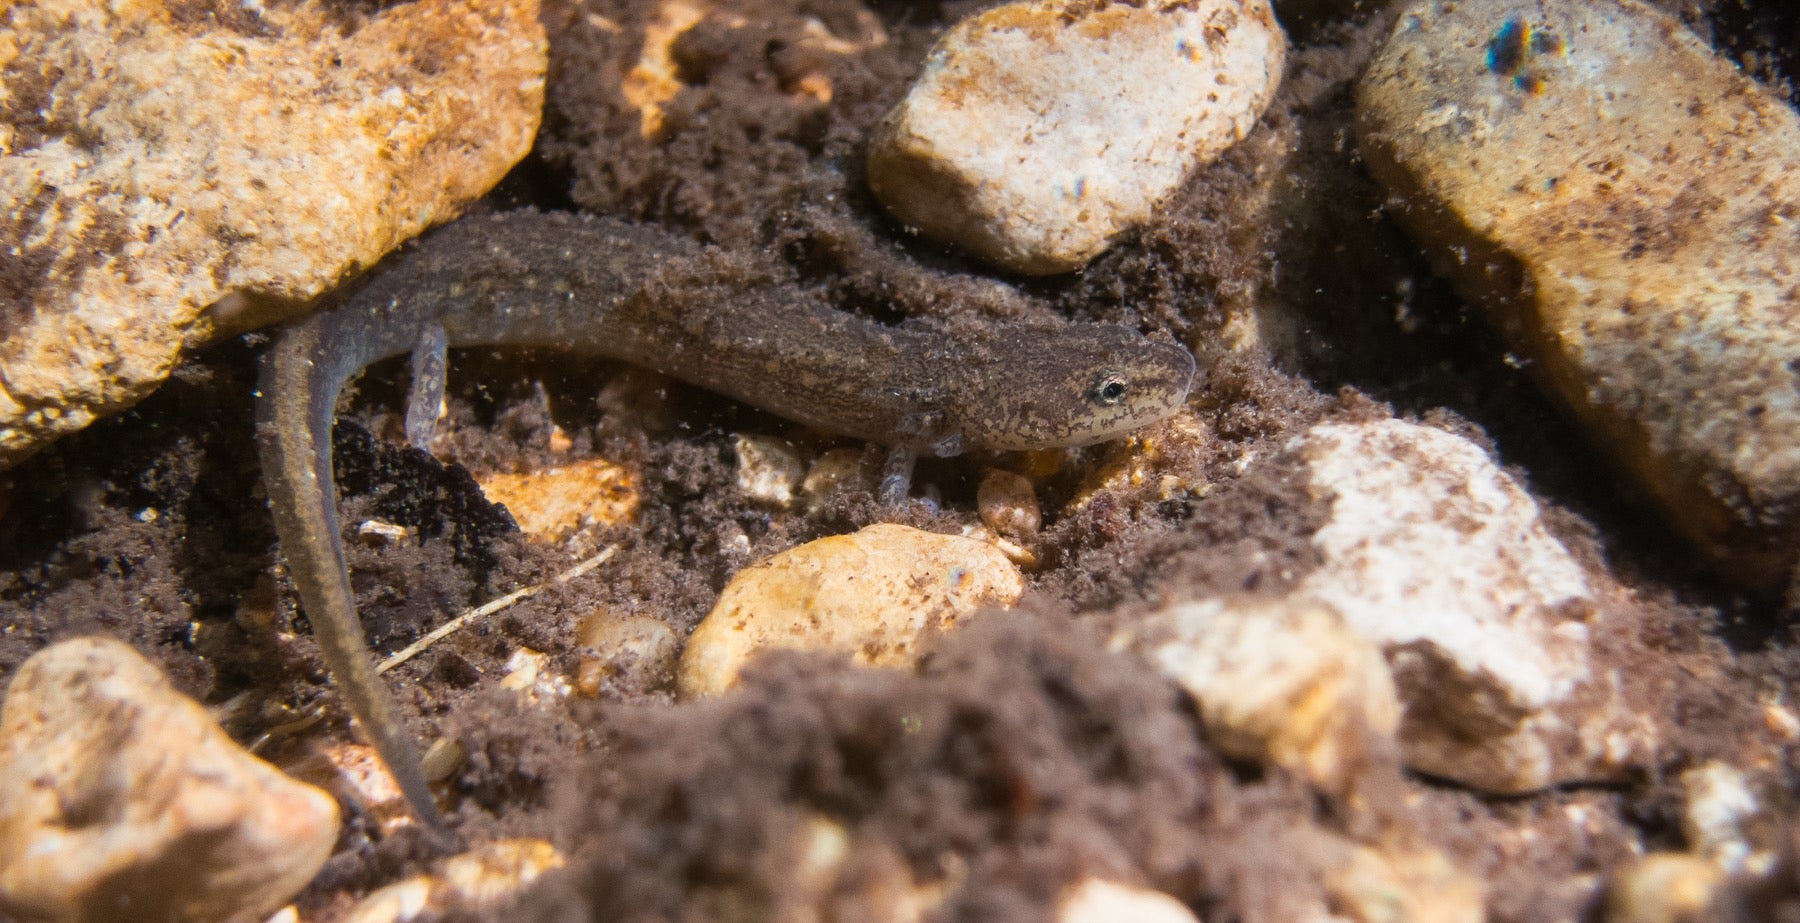 salamander coklat di beberapa batu